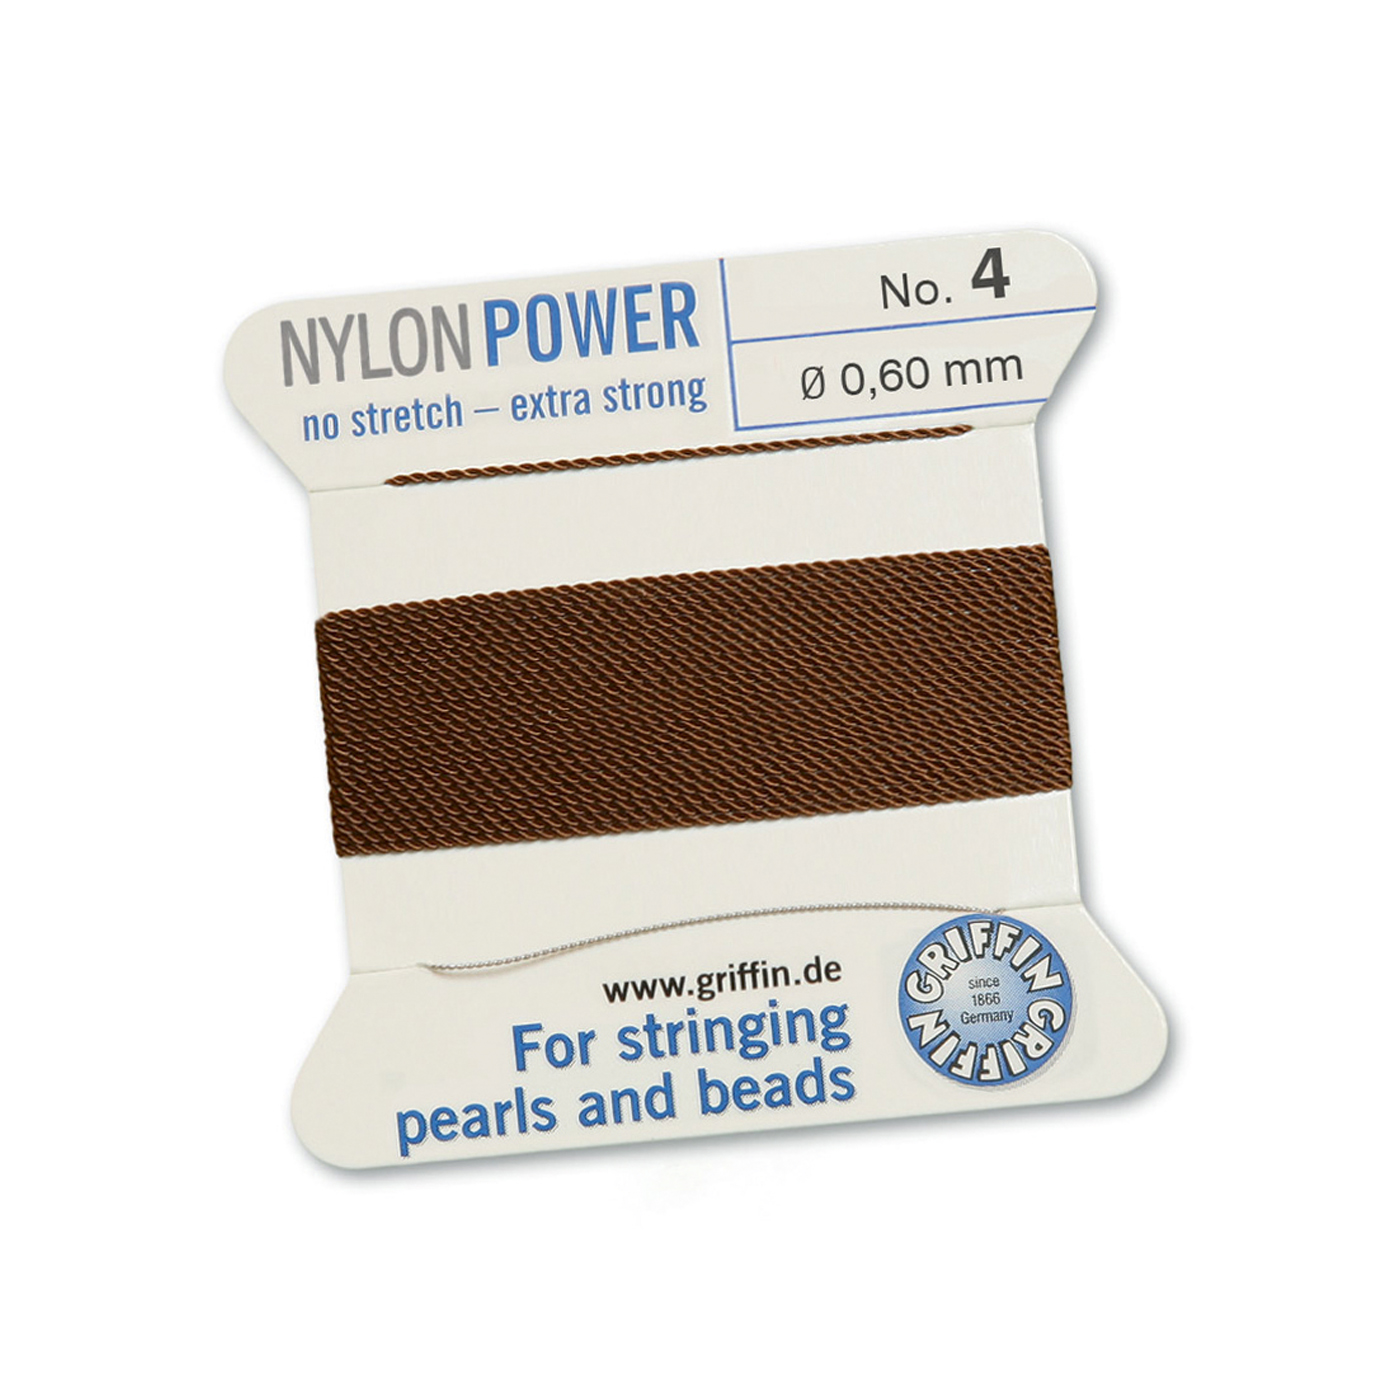 Bead Cord NylonPower, Brown, No. 4 - 2 m